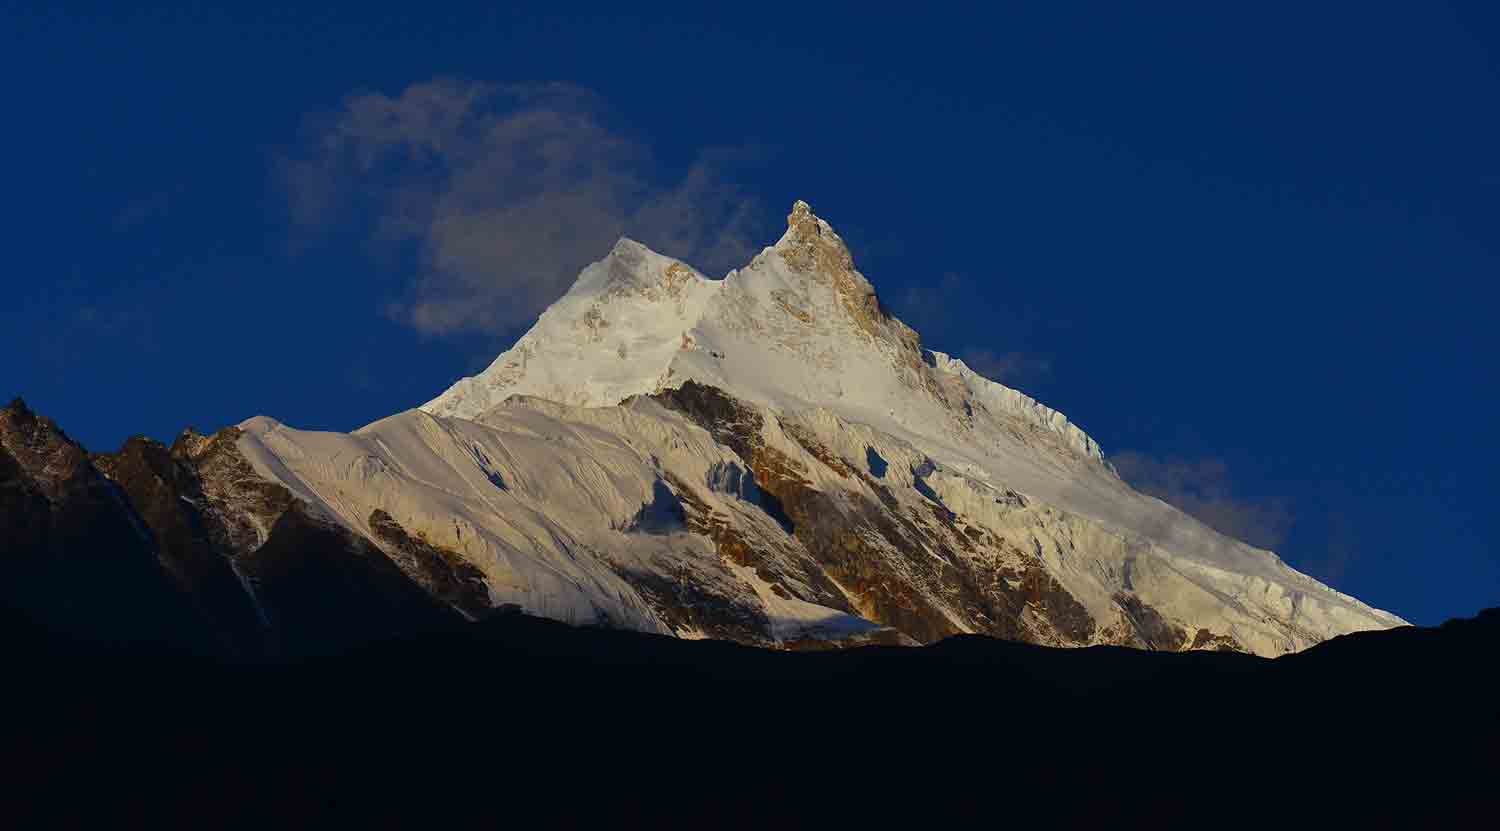 Manaslu Expedition Nepal